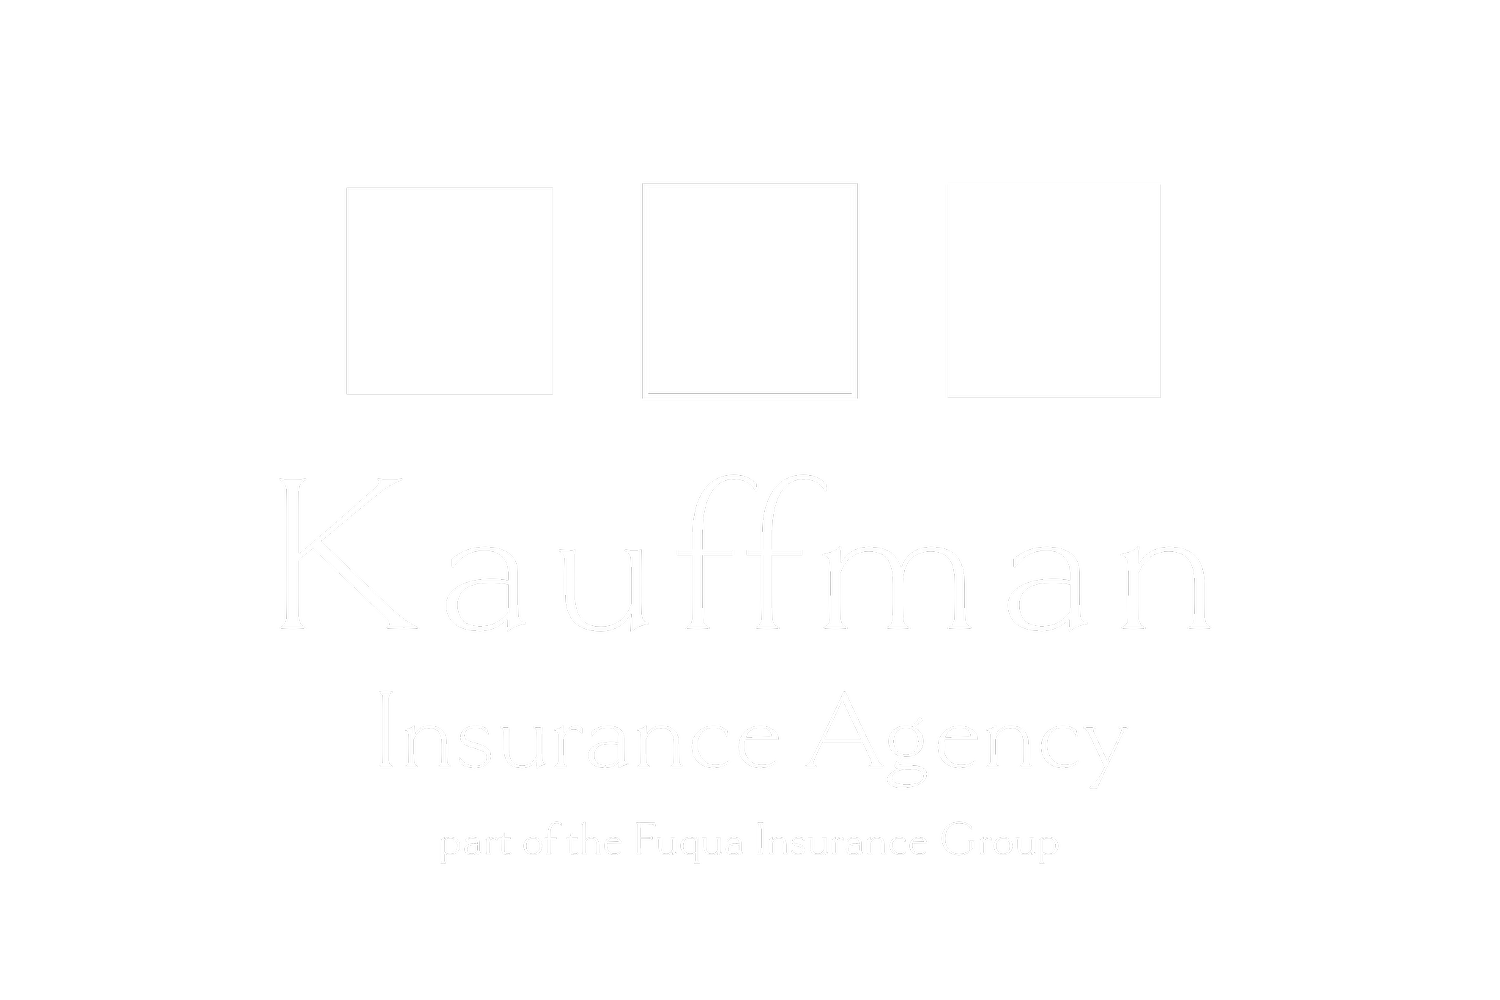 Kauffman Insurance Agency